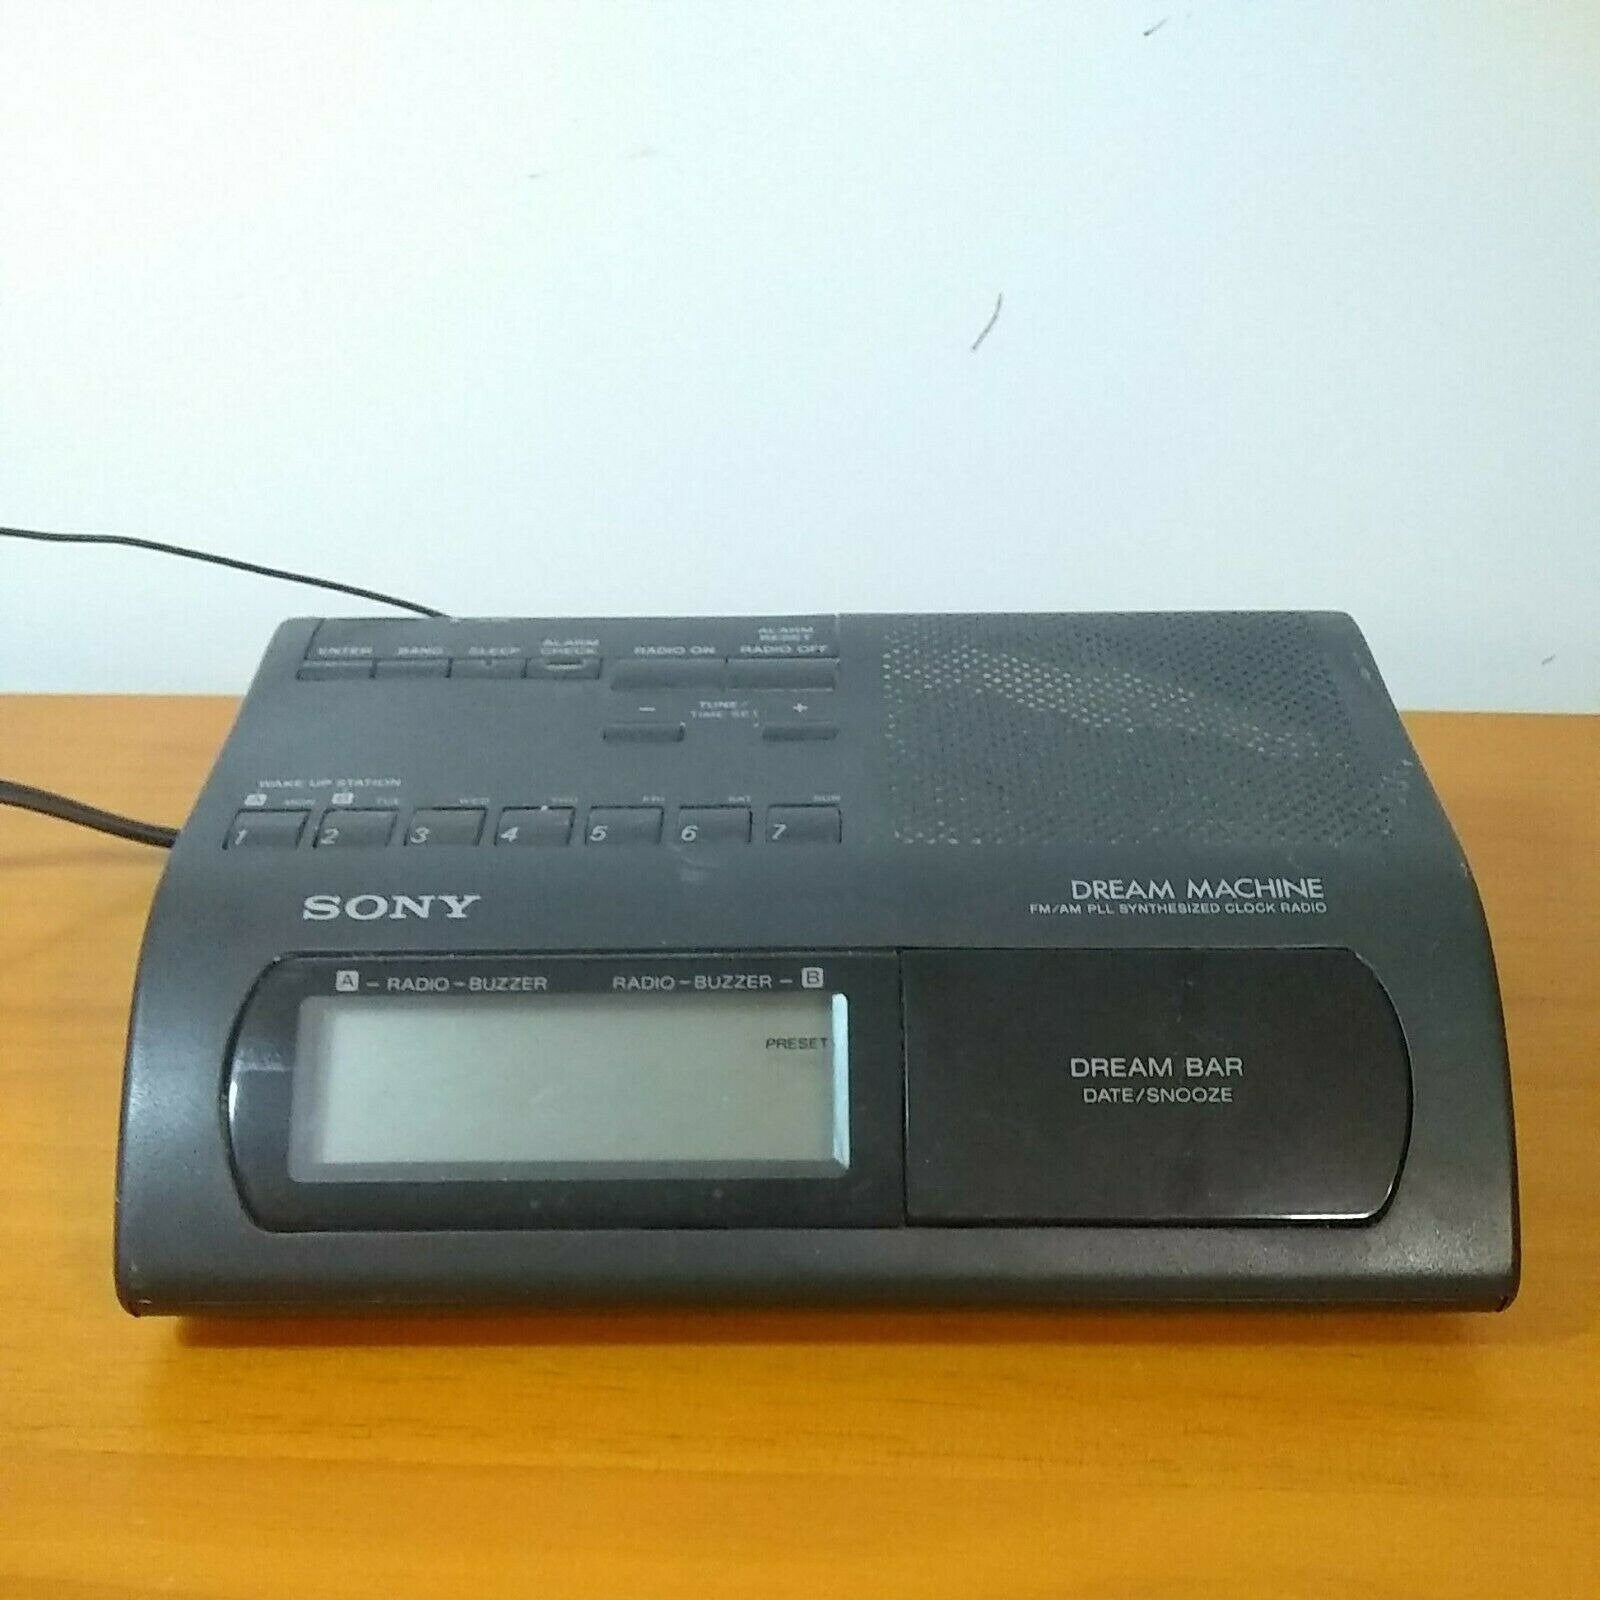 Sony ICF-C303 Am/Fm Dream Machine Alarm Clock Radio/Synthesized Clock